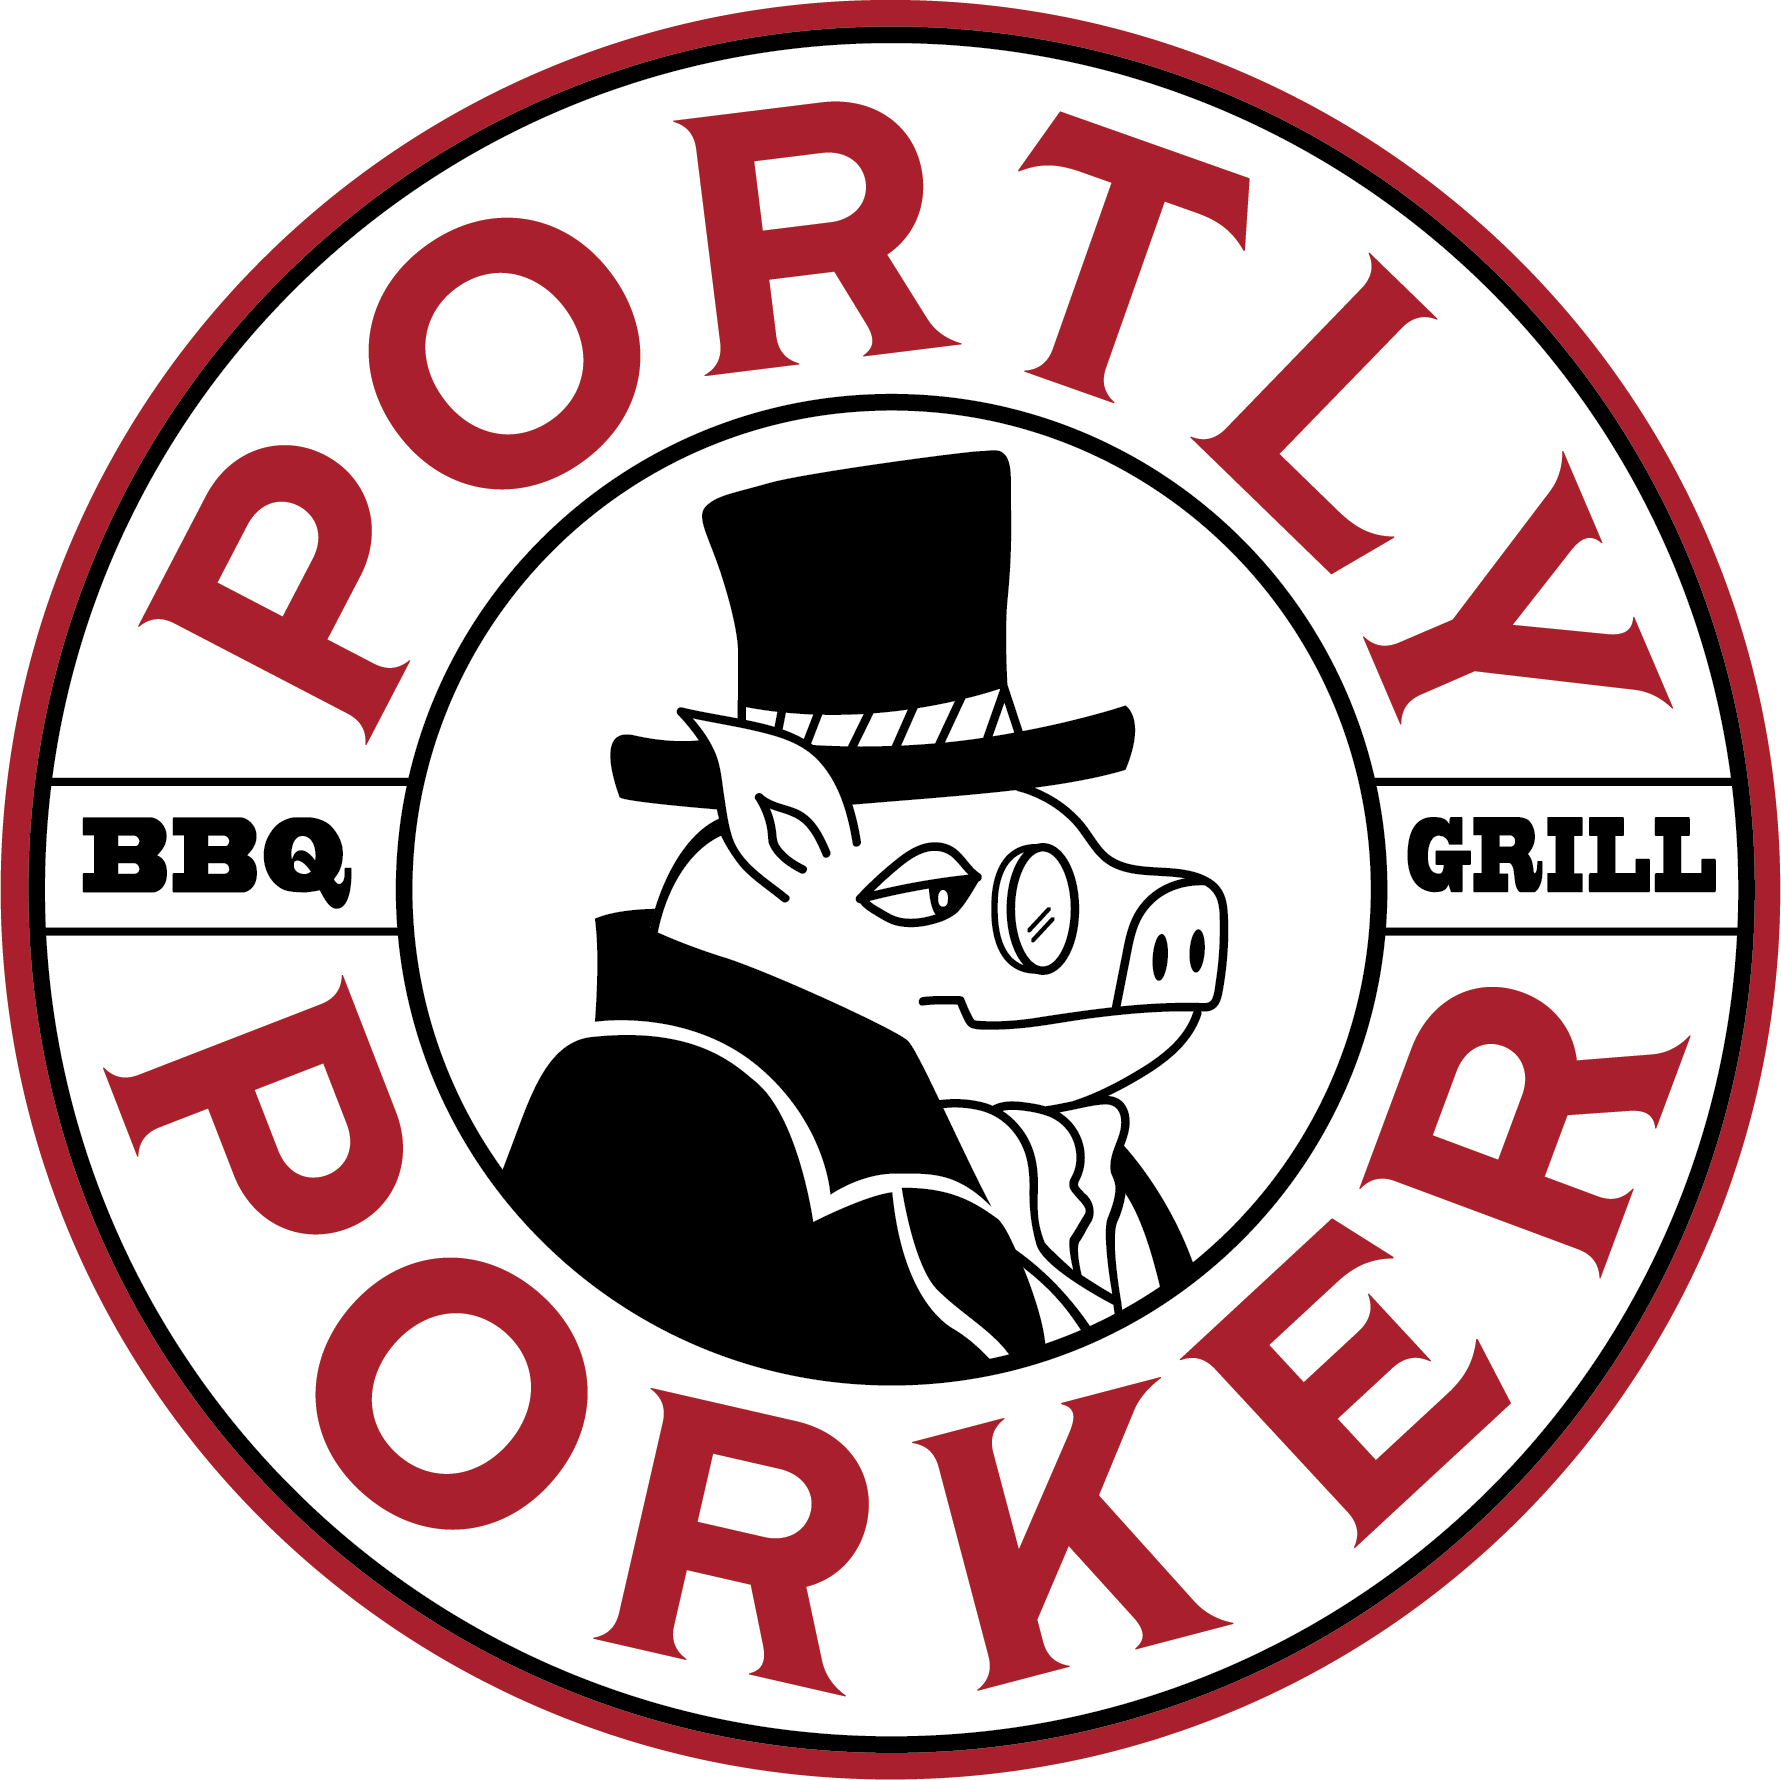 Portly Porker BBQ Grill logo